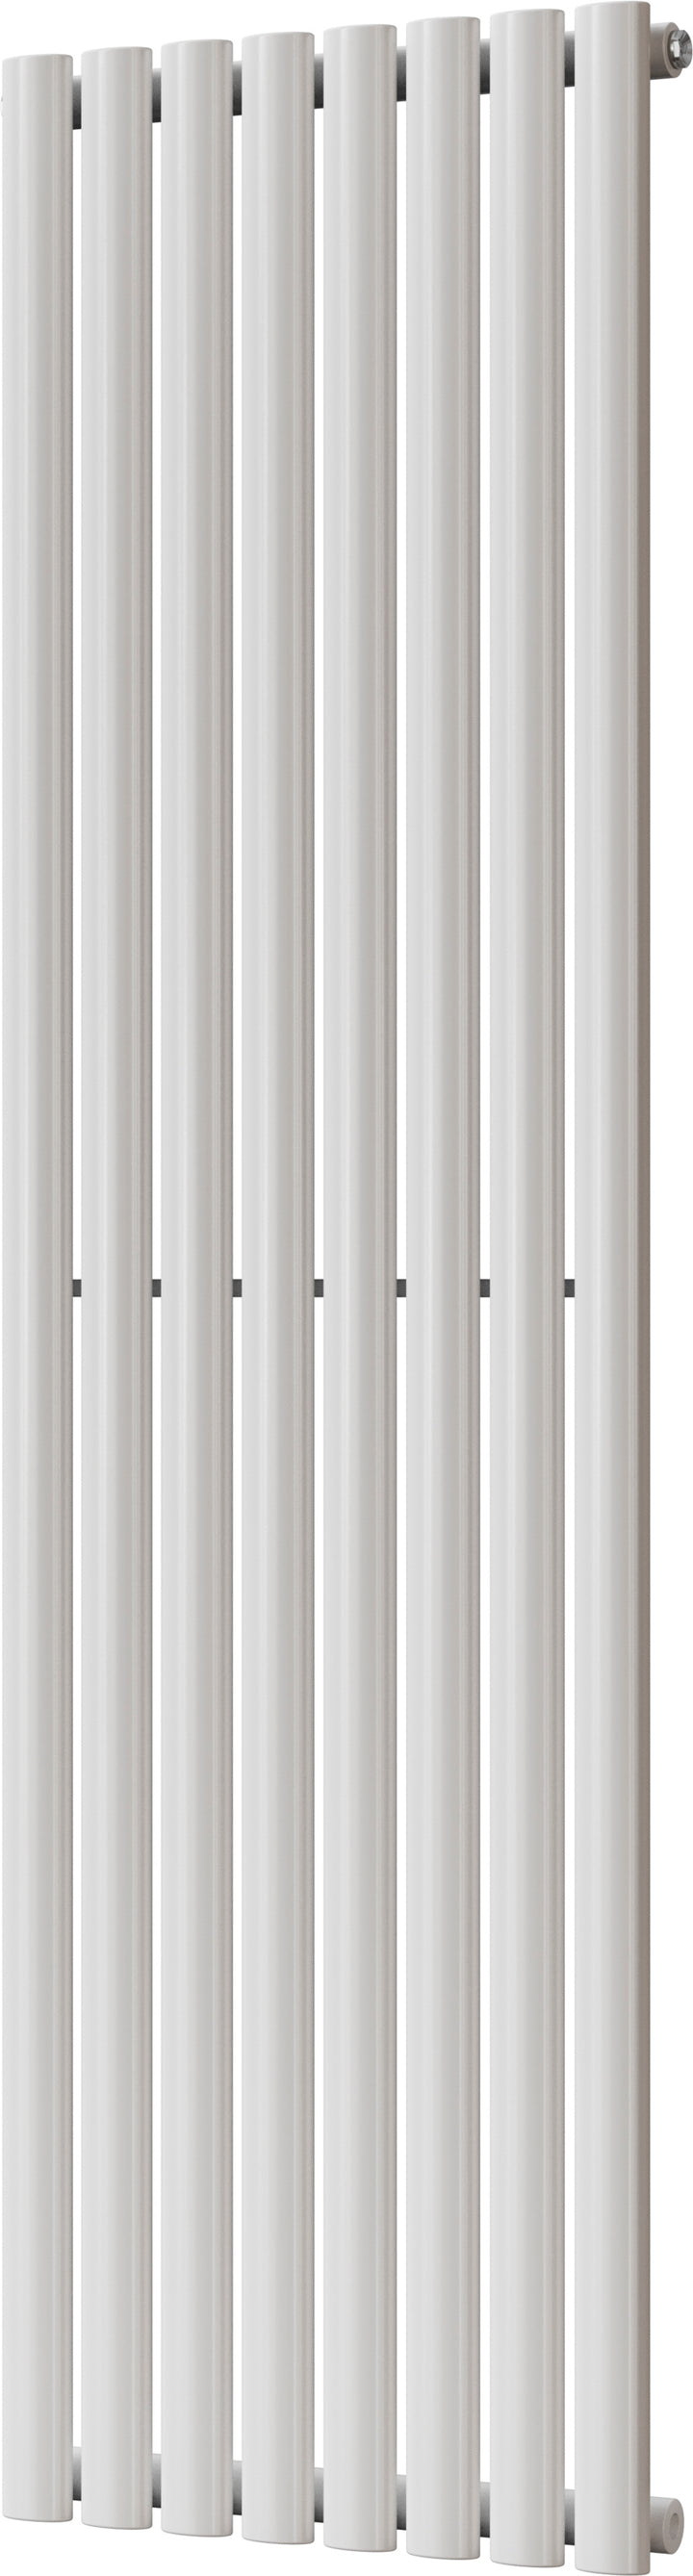 Omeara - White Vertical Radiator H1600mm x W464mm Single Panel